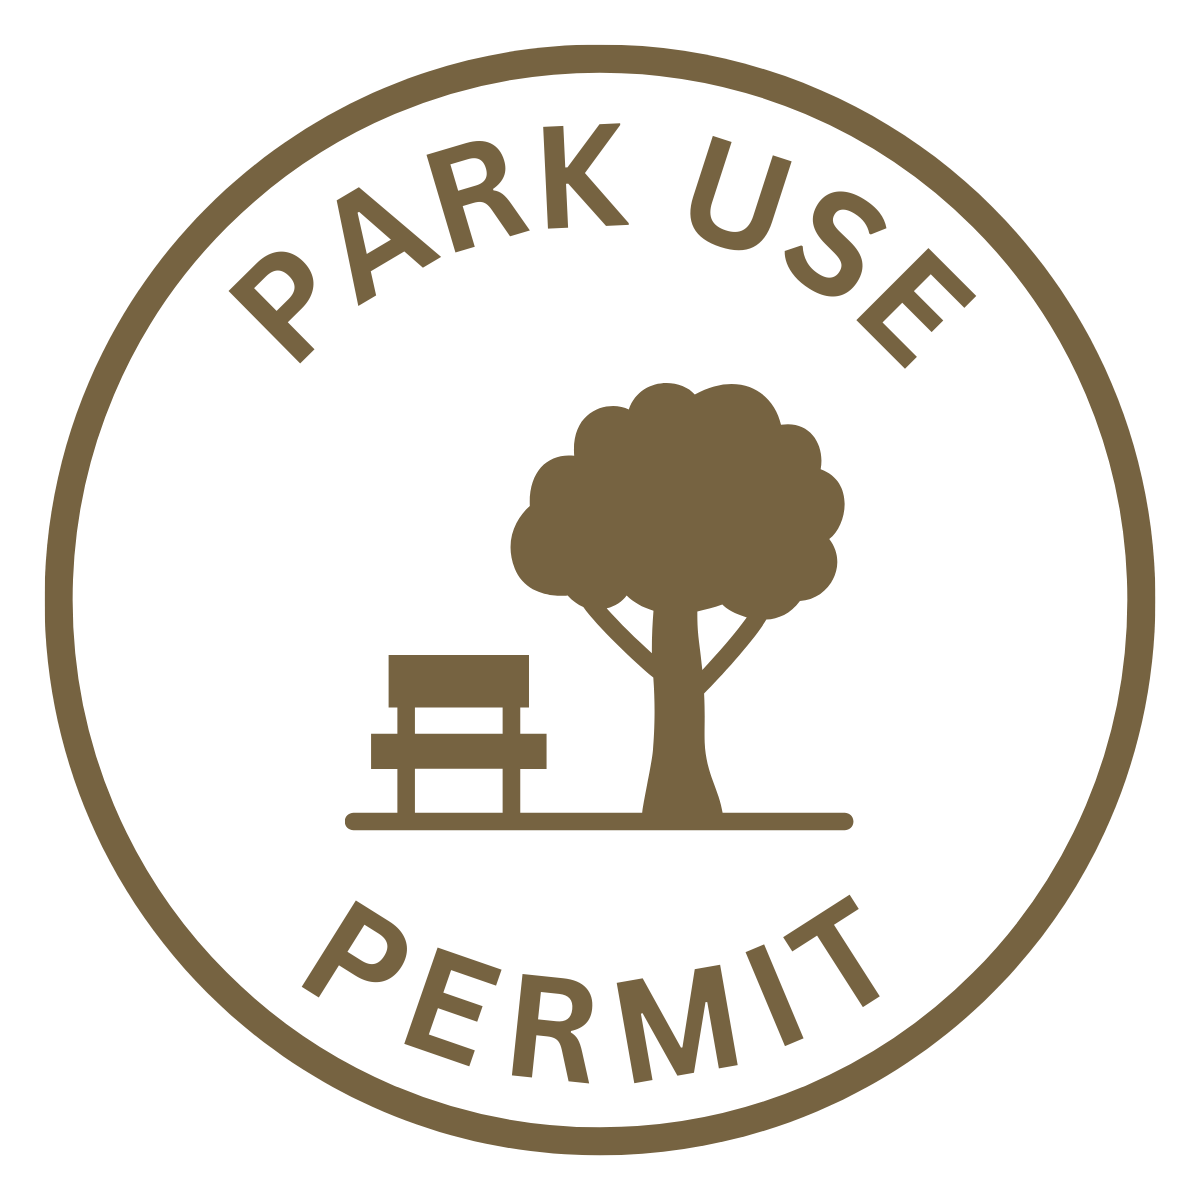 Park Use Permit